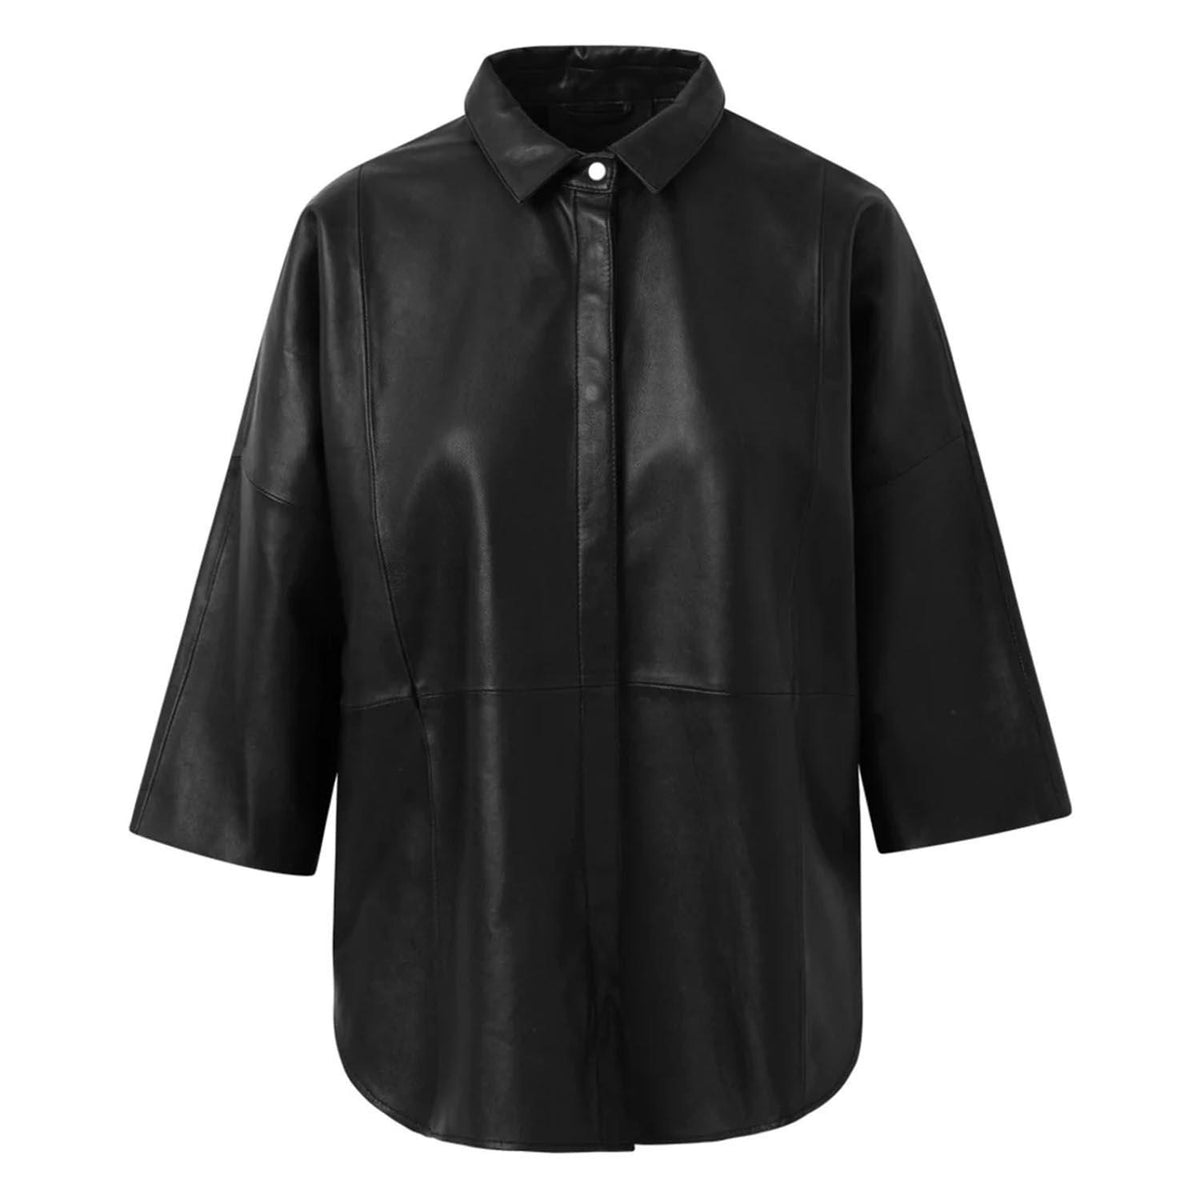 Tenna Loose Fitting Women's Leather Shirt Nero Black